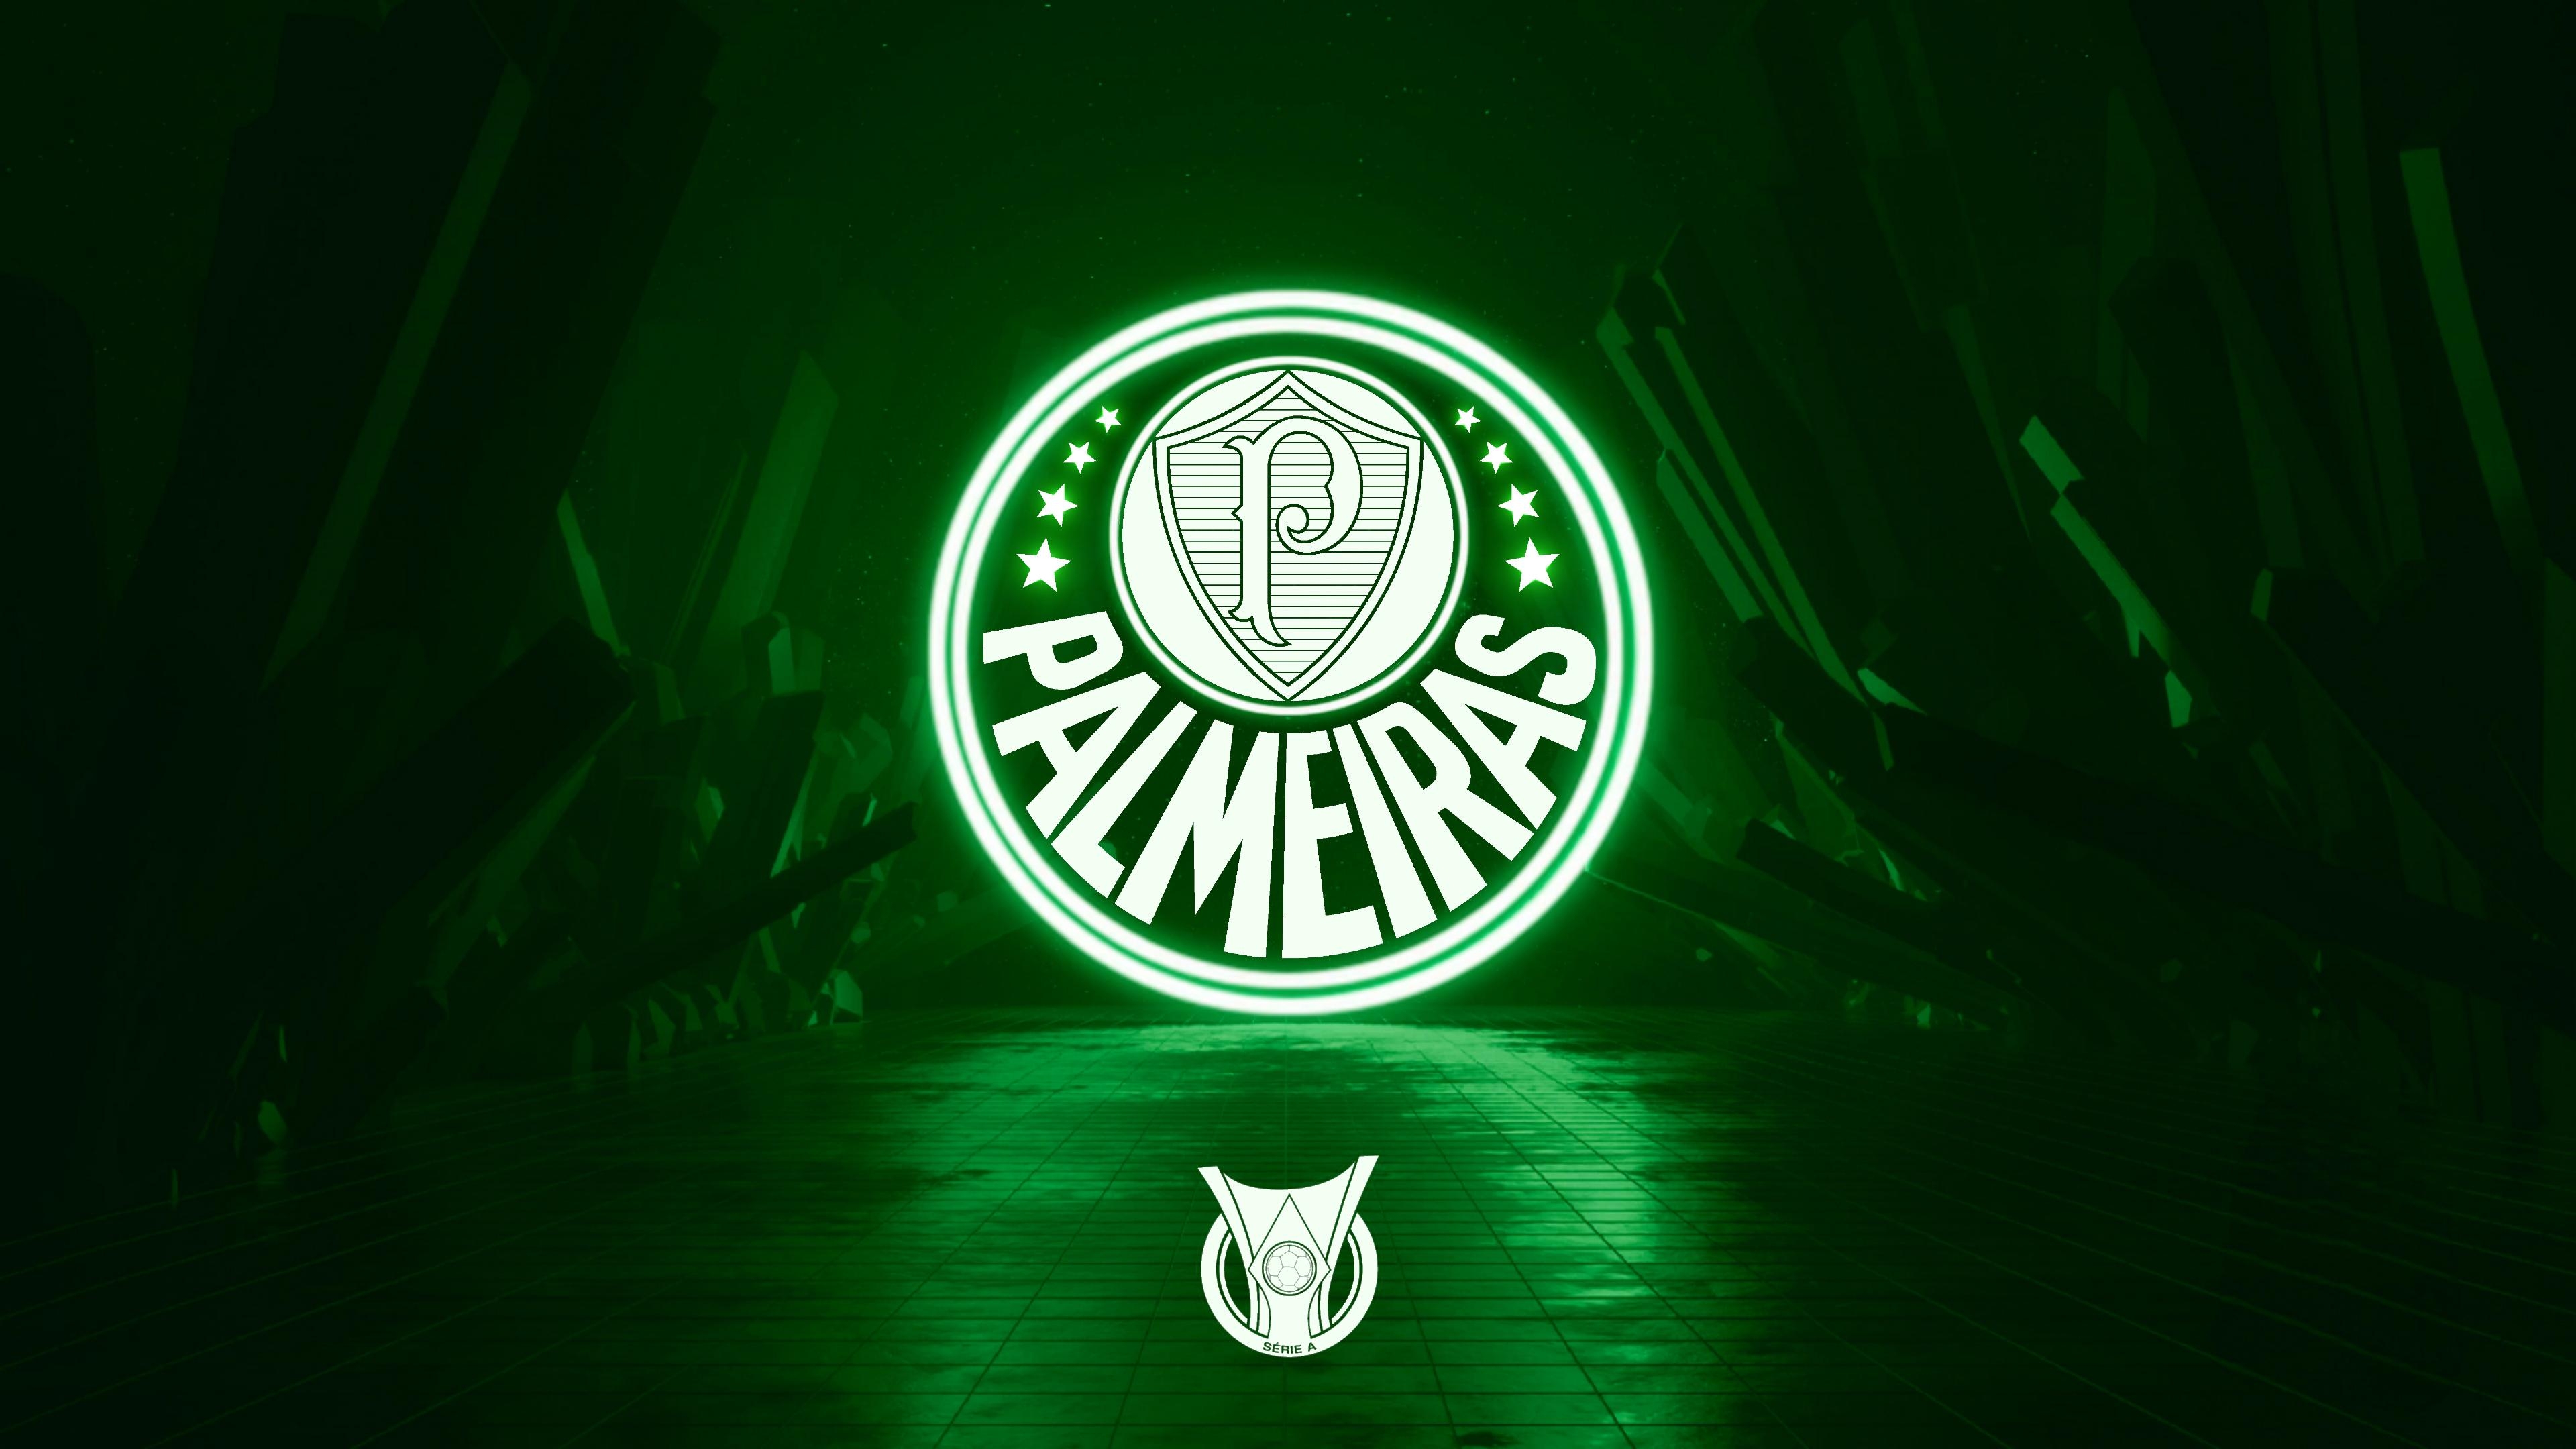 Sociedade Esportiva Palmeiras HD desktop wallpaper and background featuring the team logo and colors in an artistic design.